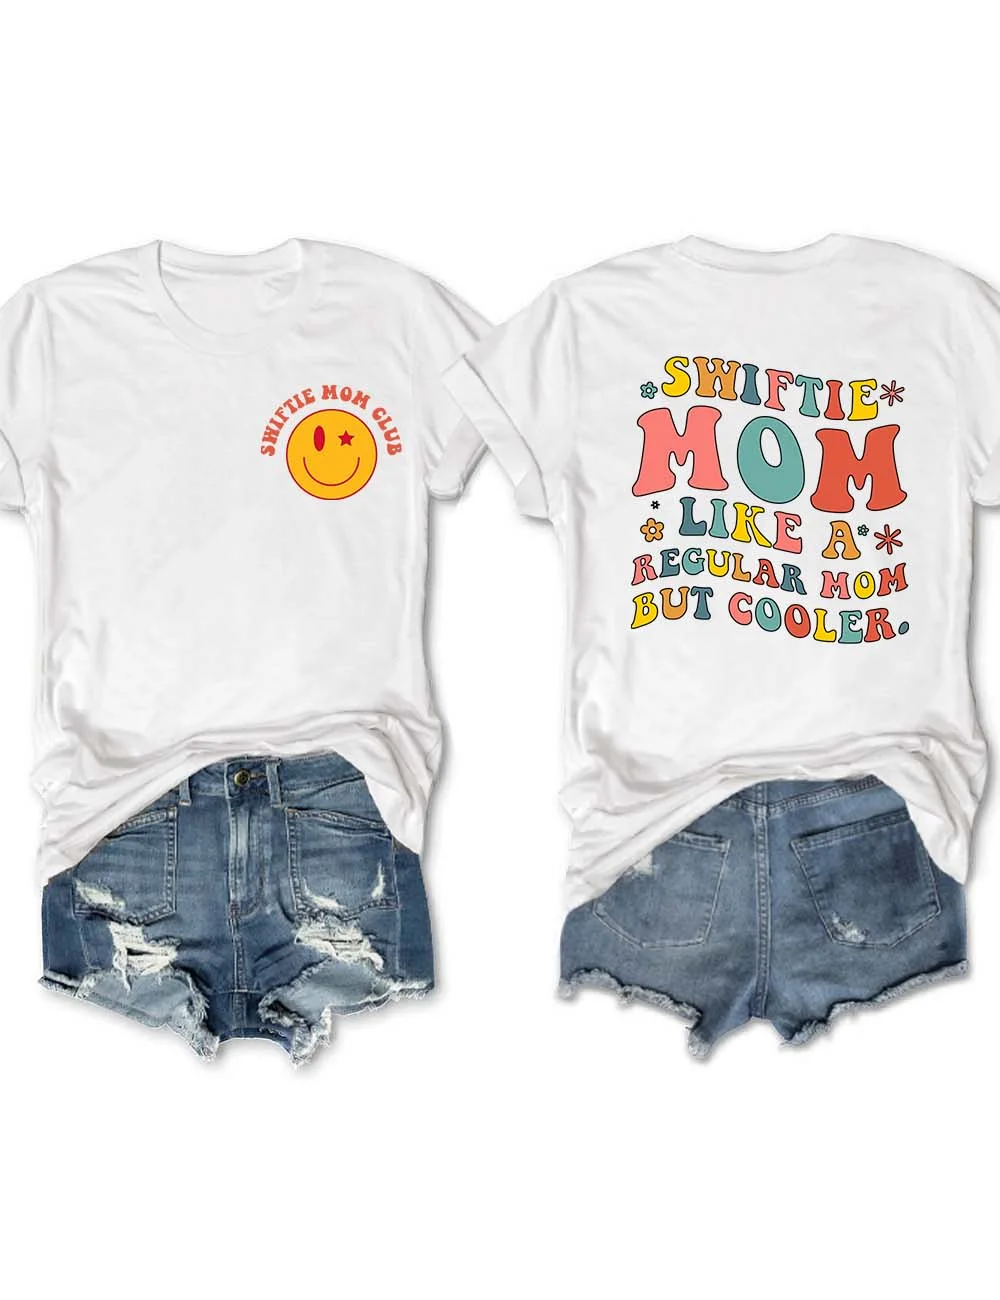 Swiftie Mom Not Like A Regular Mom T-Shirt